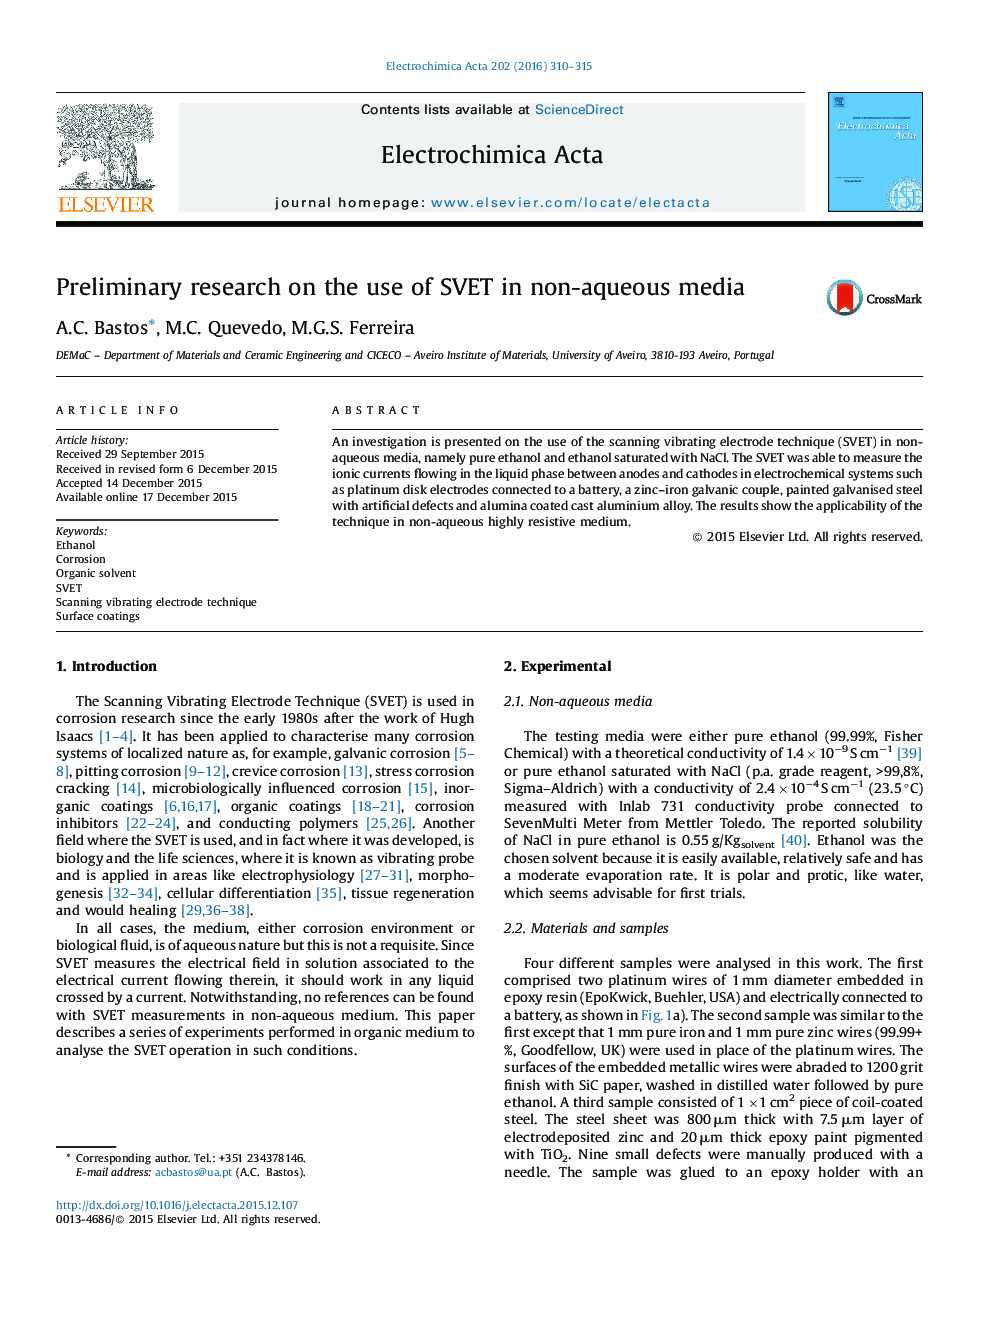 Preliminary research on the use of SVET in non-aqueous media